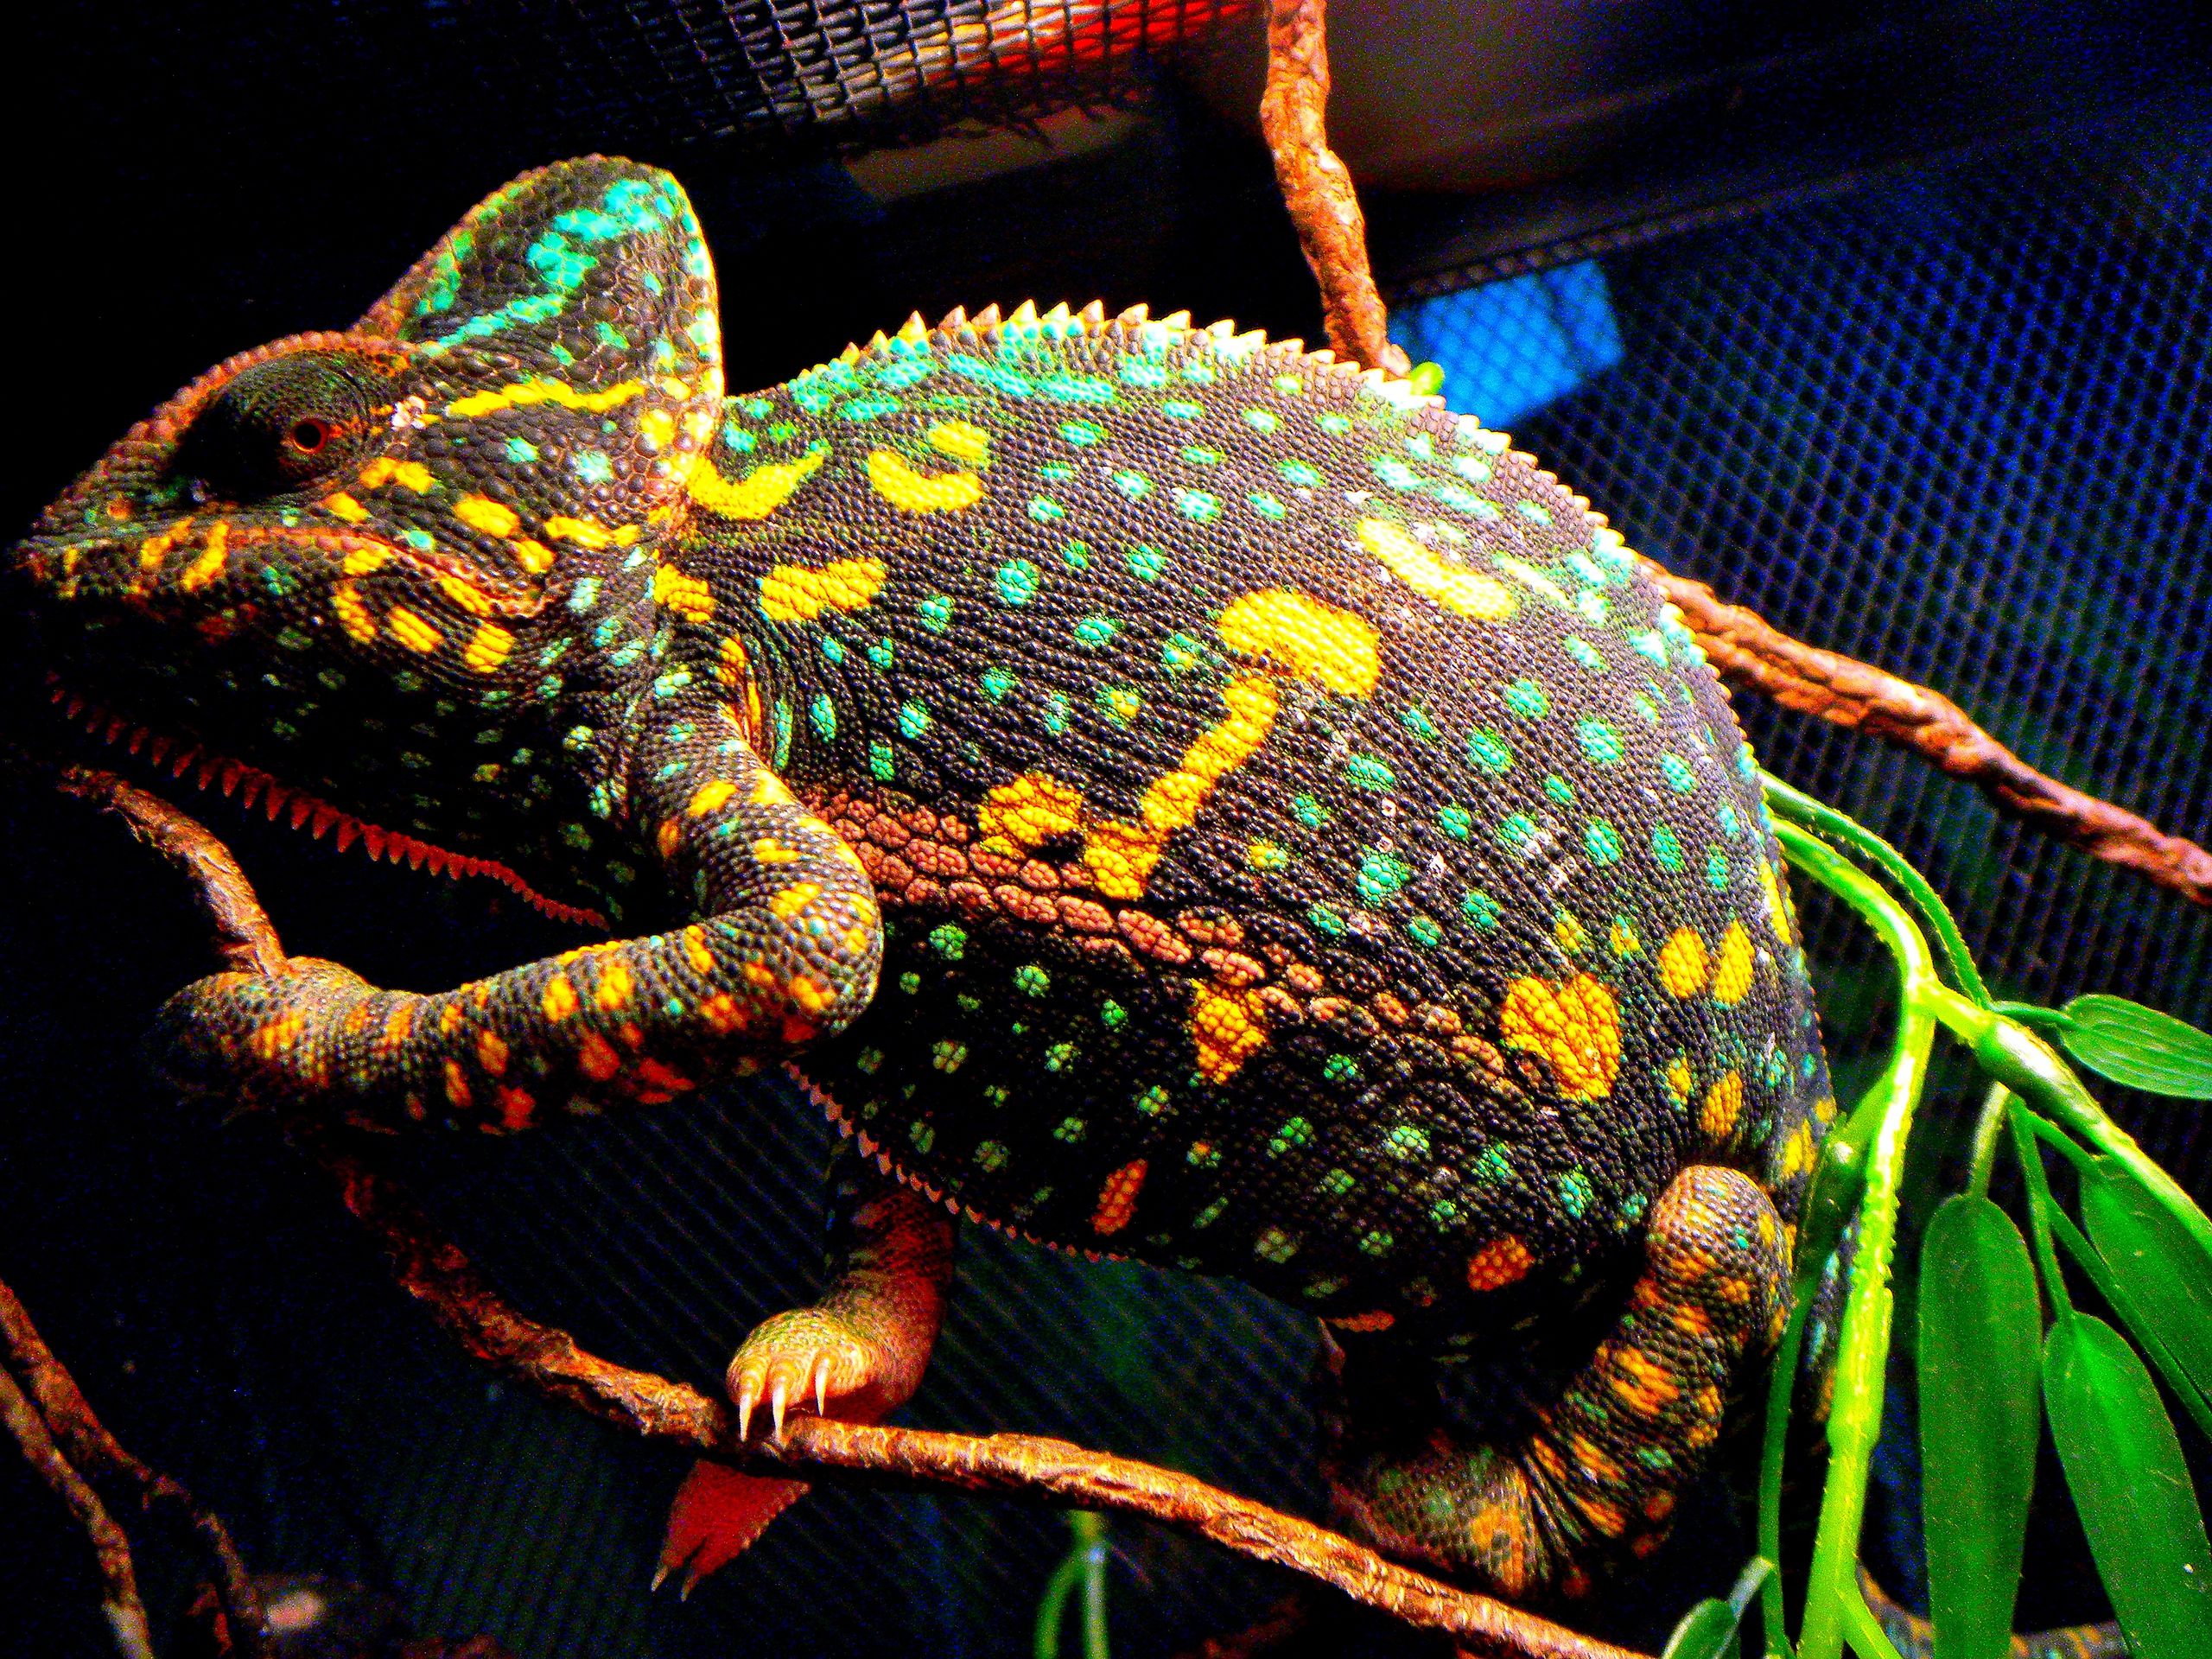 Female-Veiled-Chameleon-Non-Receptive-yet-Beautiful-Colors-reptiles-23880904-2560-1920.jpg